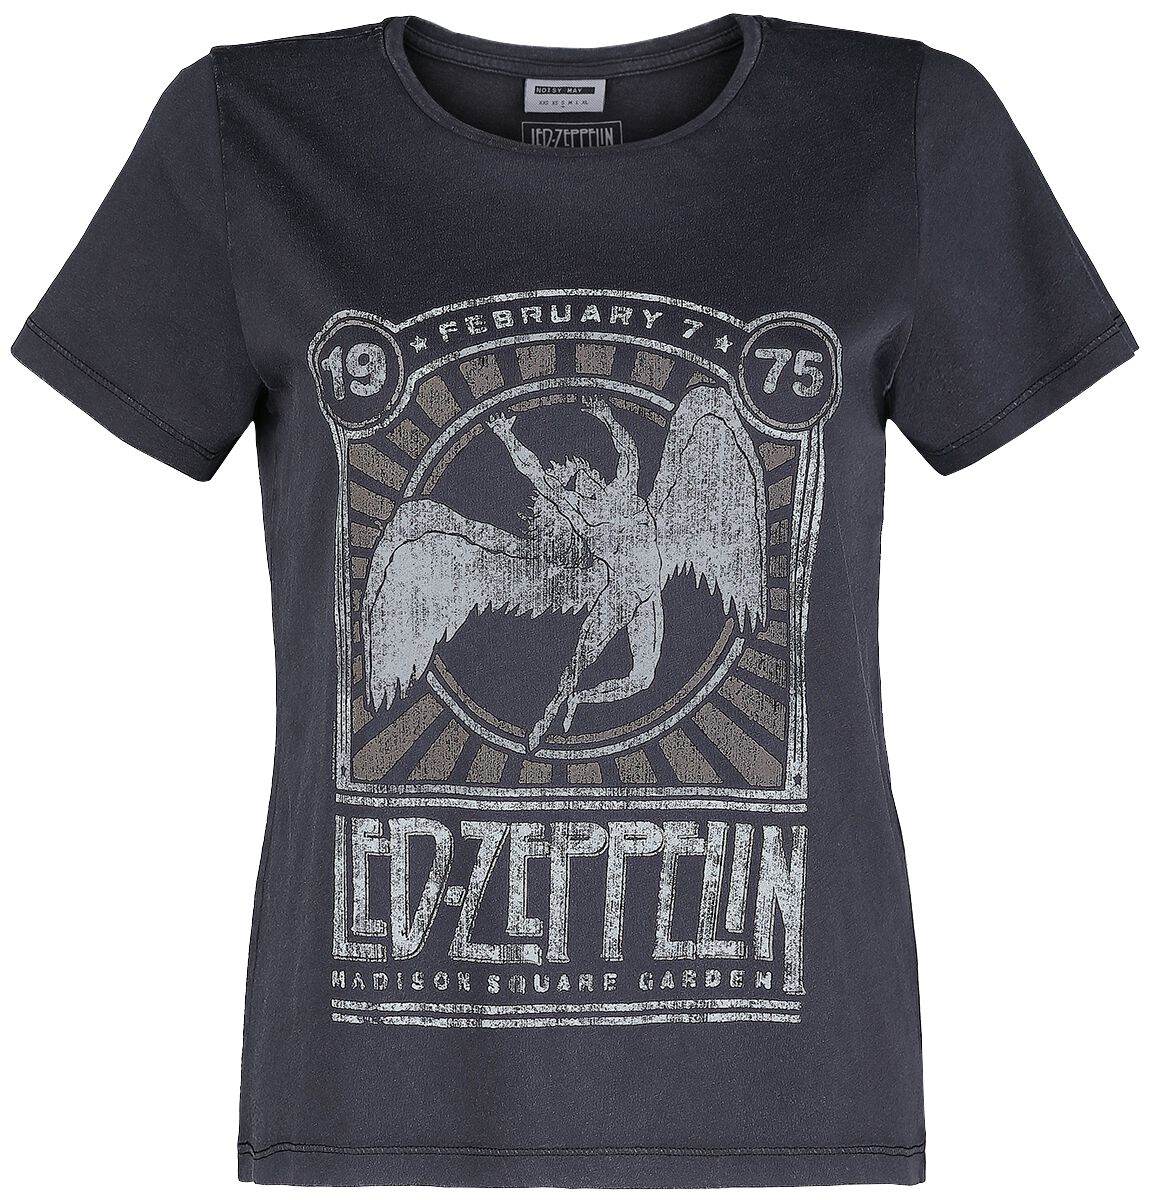 Led Zeppelin Noisy May - Madison Square Garden T-Shirt charcoal